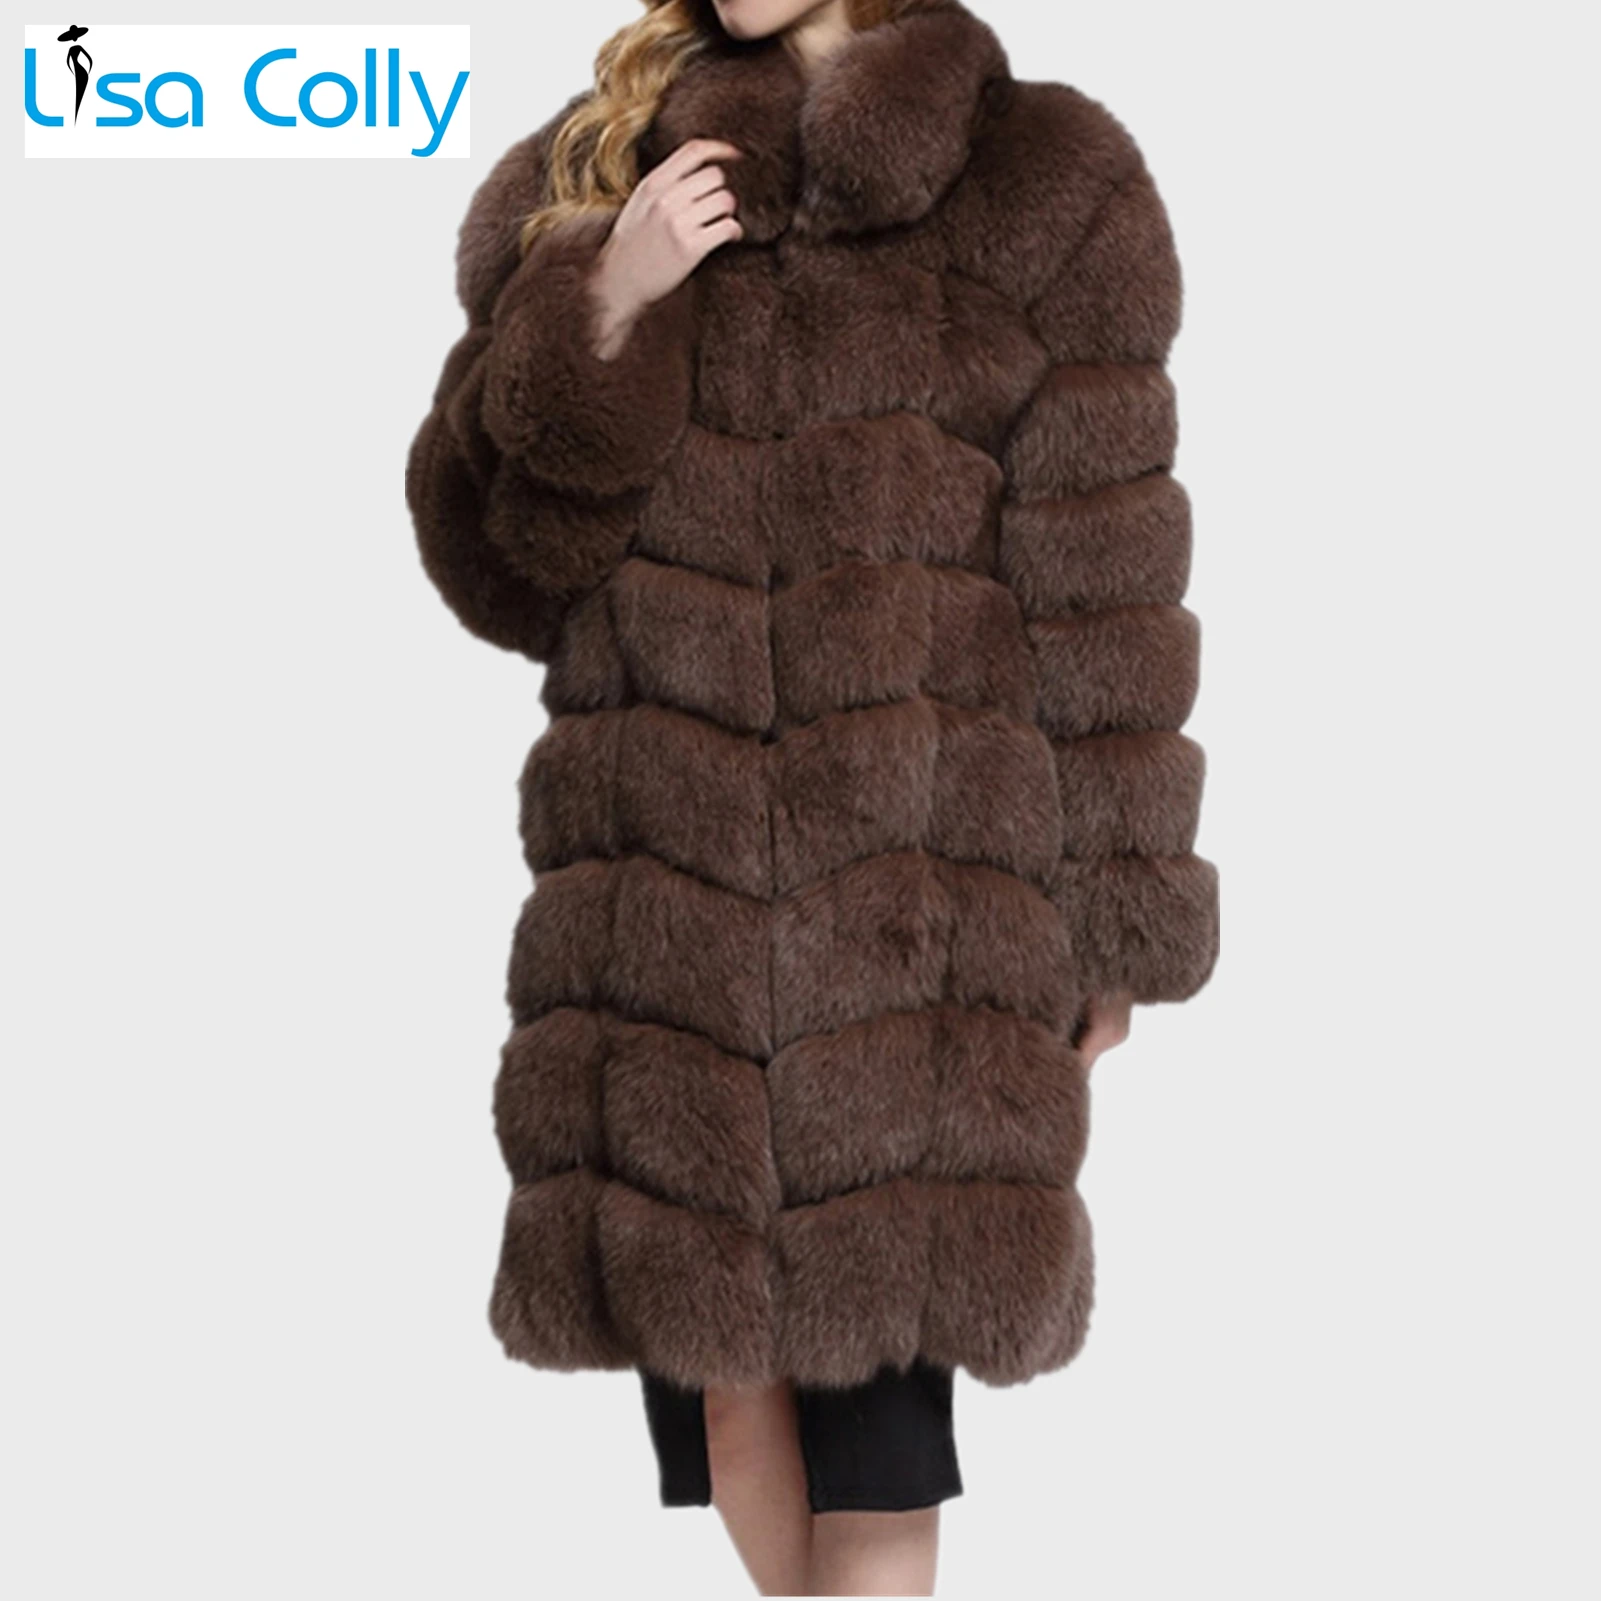 Lisa Colly Women Long Sleeves Stand Faux Fox Fur Coat Jacket Women Winter Warm Luxury Fake Fur Coat Thick Furs Coat Overcoat